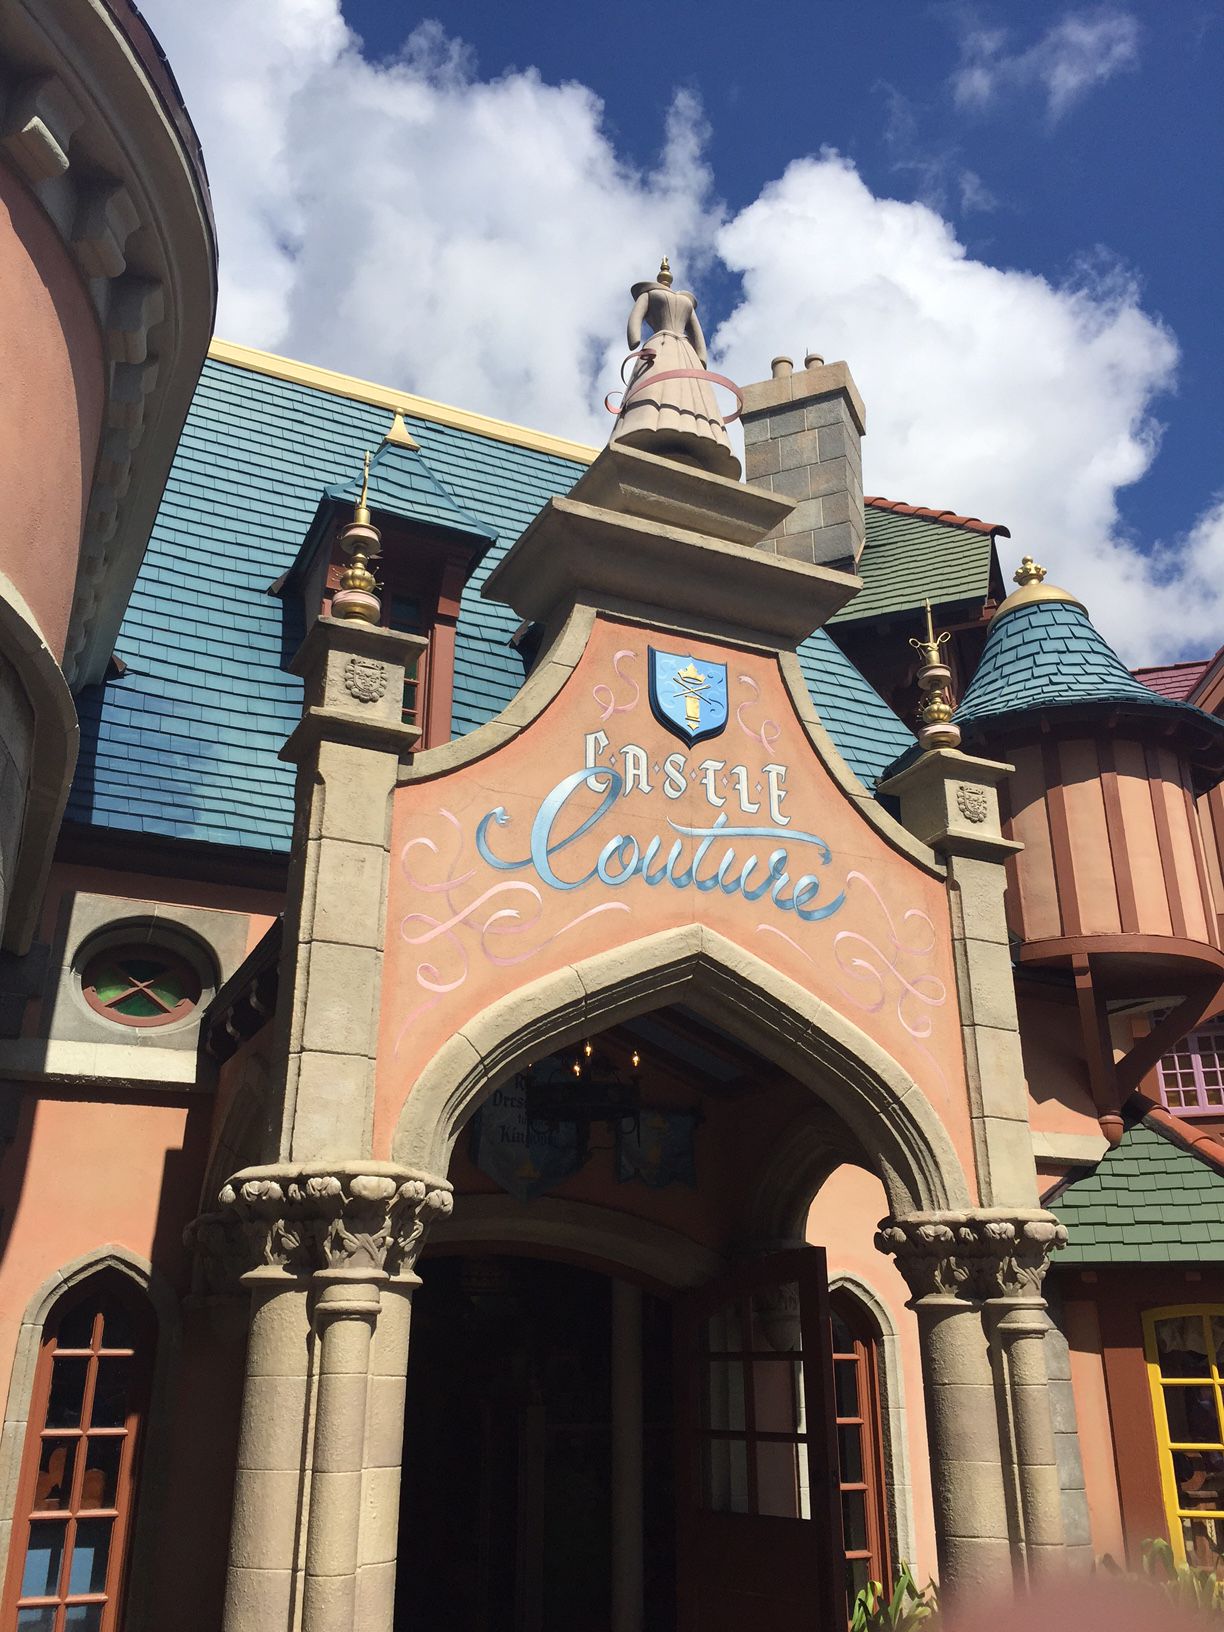 Learn to appreciate the small details at Walt Disney World | PassPorter.com